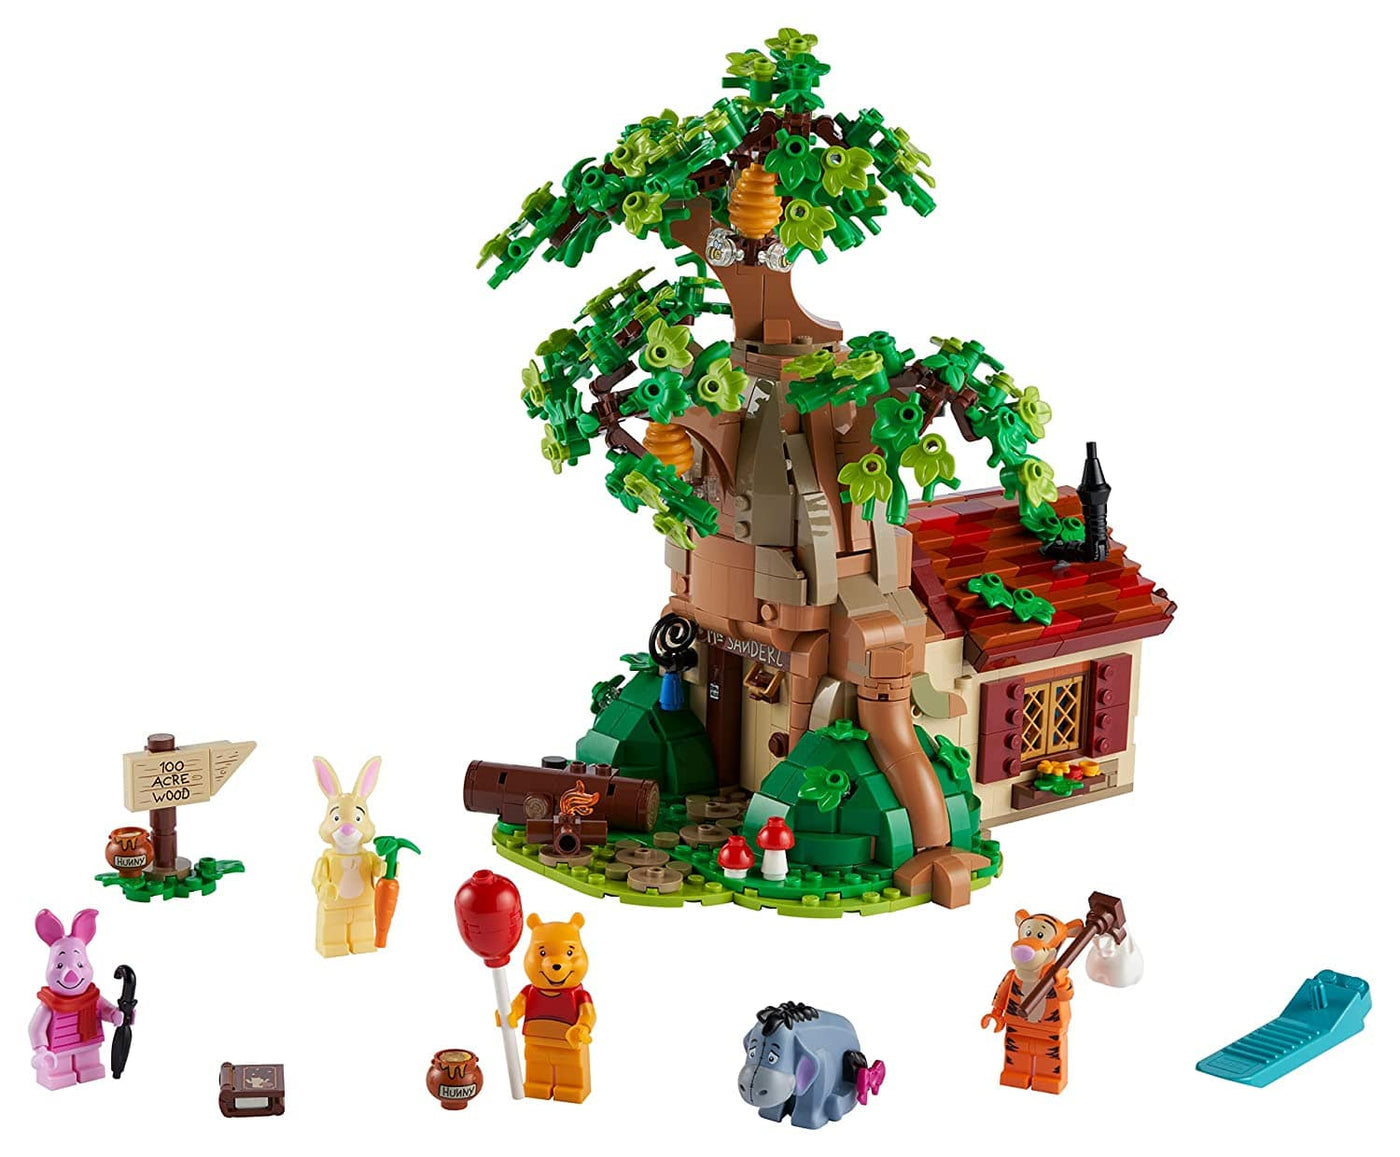 Winnie the Pooh: 21326 Disney™ - 1265 PCS | LEGO® by LEGO, Denmark Toy